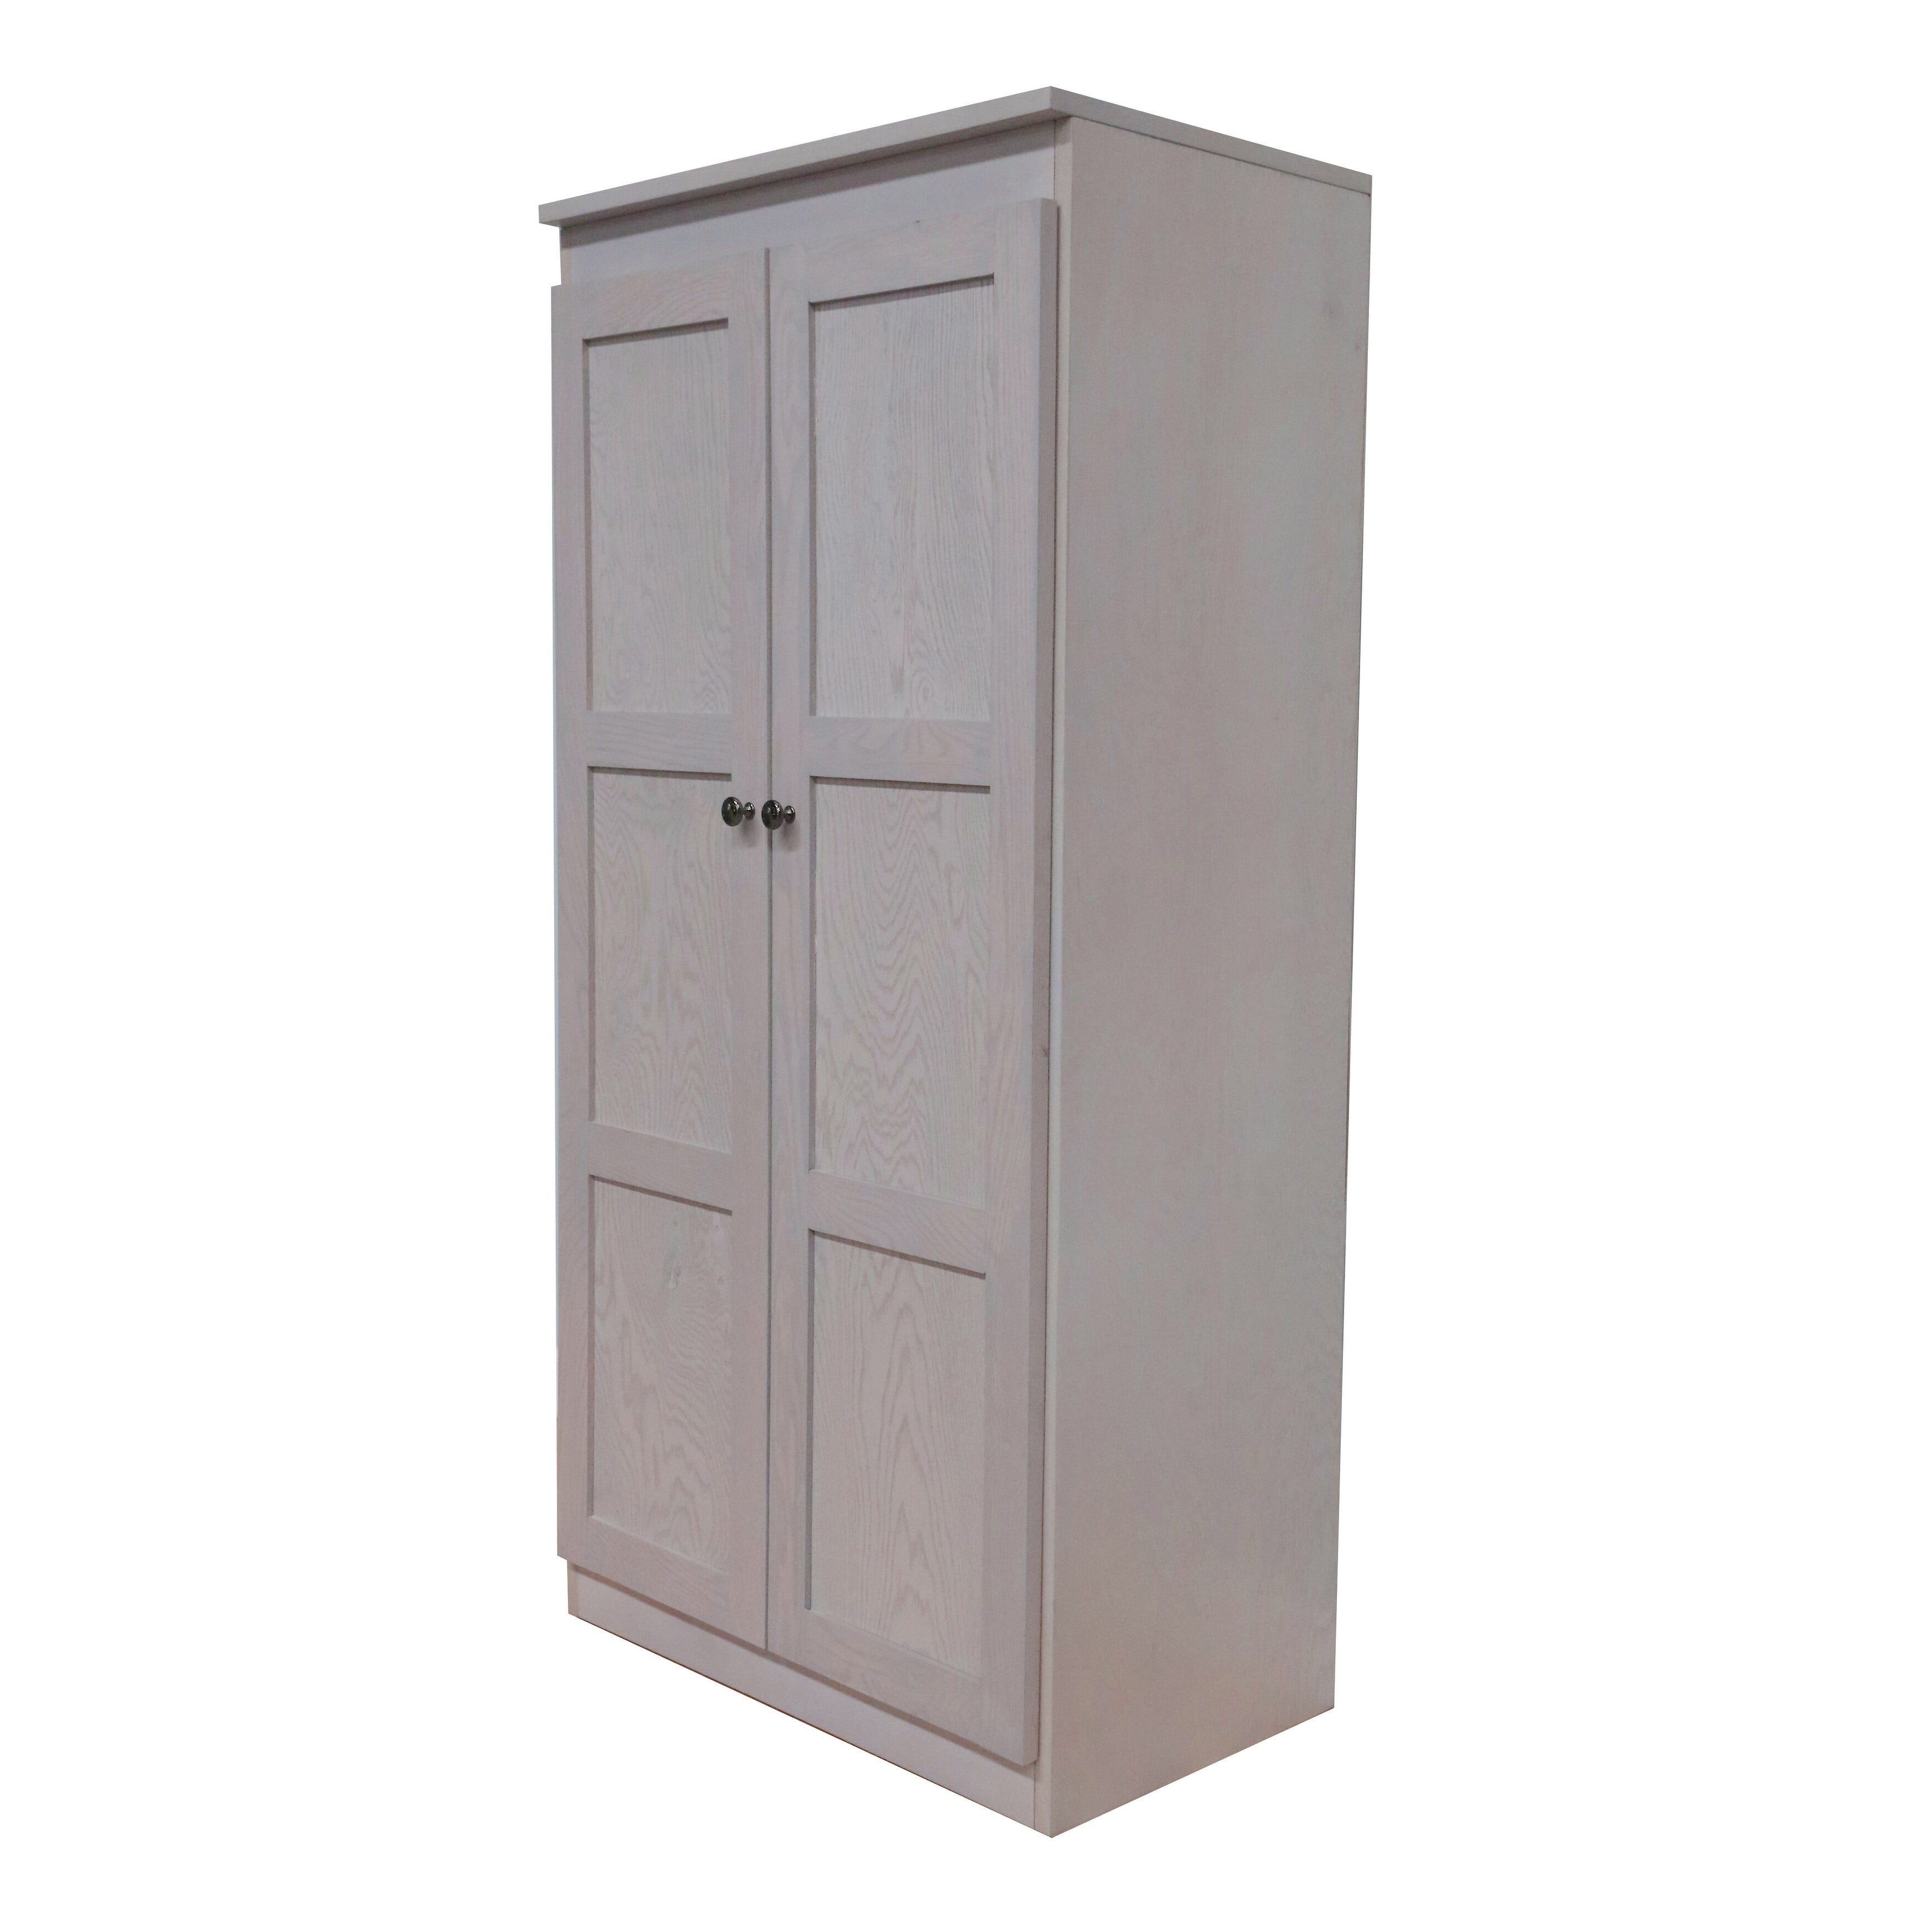 A. Joffe 4-Shelf Multi-Use Storage Cabinet, Select Color